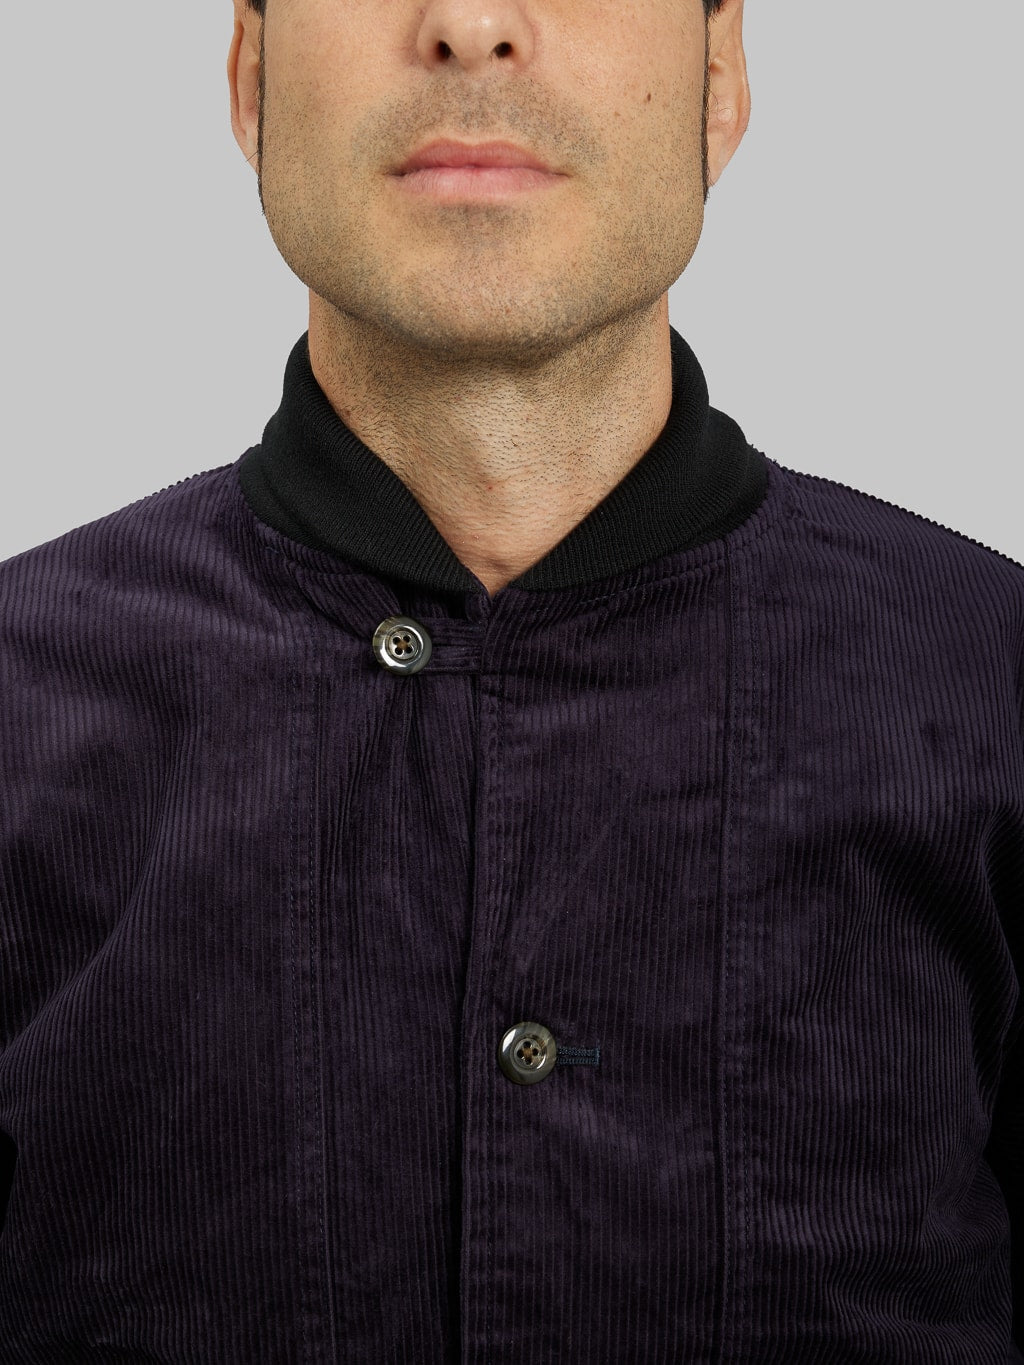 Tanuki Sazanami Corduroy natural indigo dyed Jacket  buttoned collar